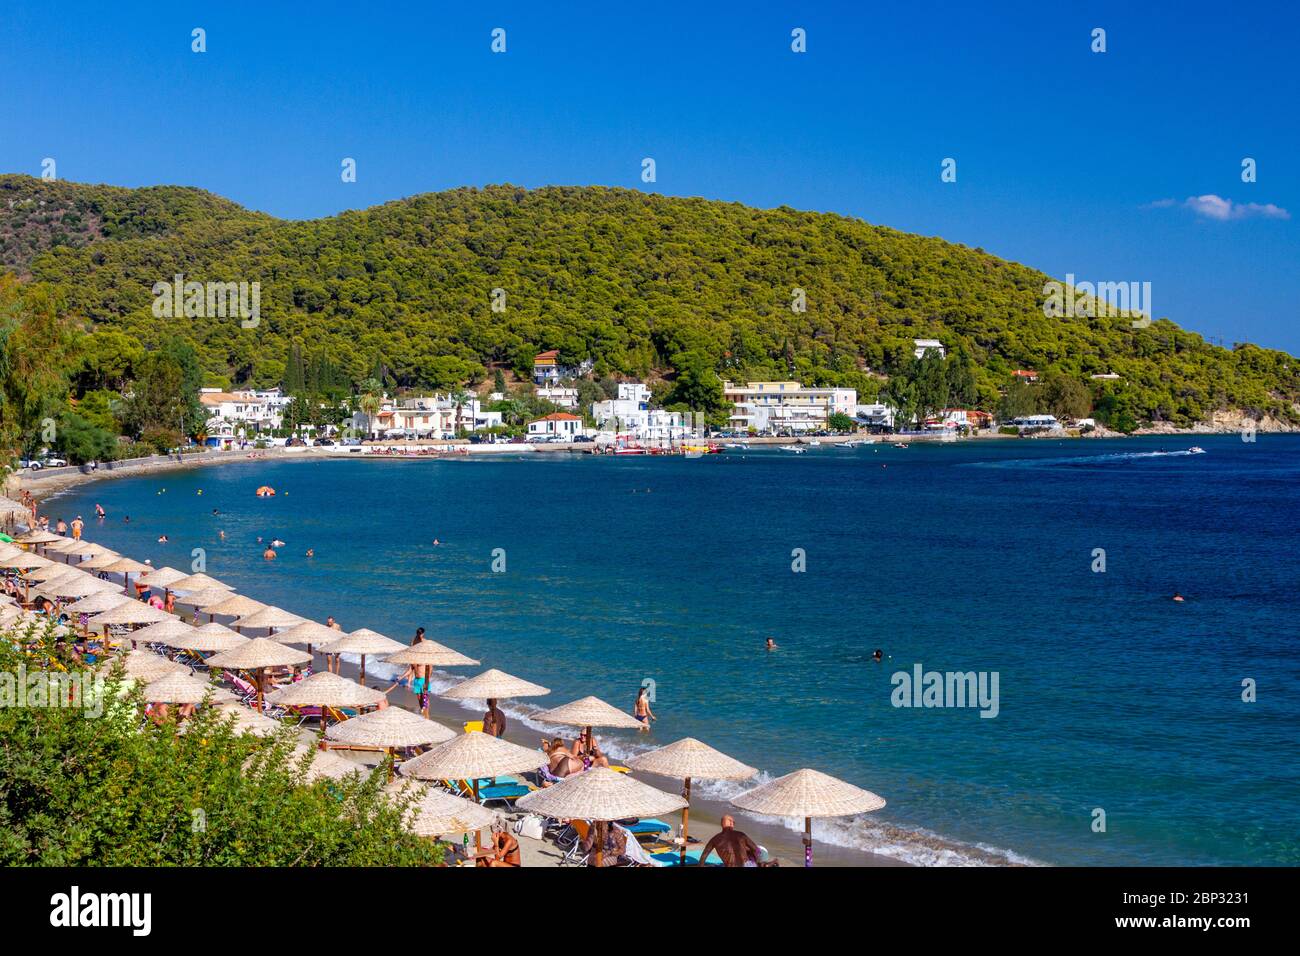 Spiaggia organizzata di Askeli, in Poros isola, Golfo Saronico, Grecia, Europa. Foto Stock